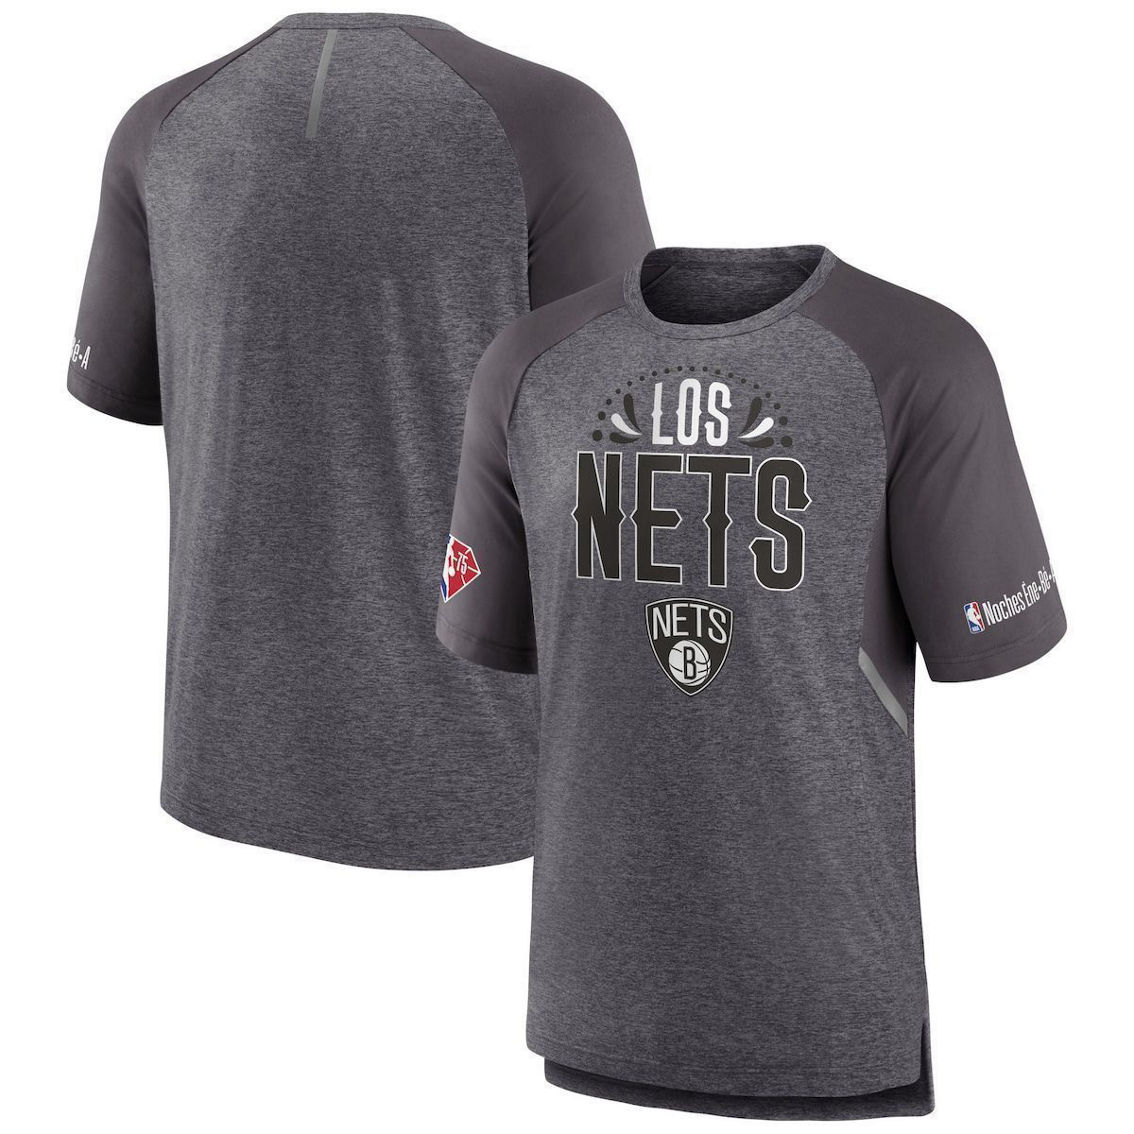 Fanatics Branded Men's Heathered Gray Brooklyn Nets 2022 Noches Ene-Be-A Core Shooting Raglan T-Shirt - Image 2 of 4